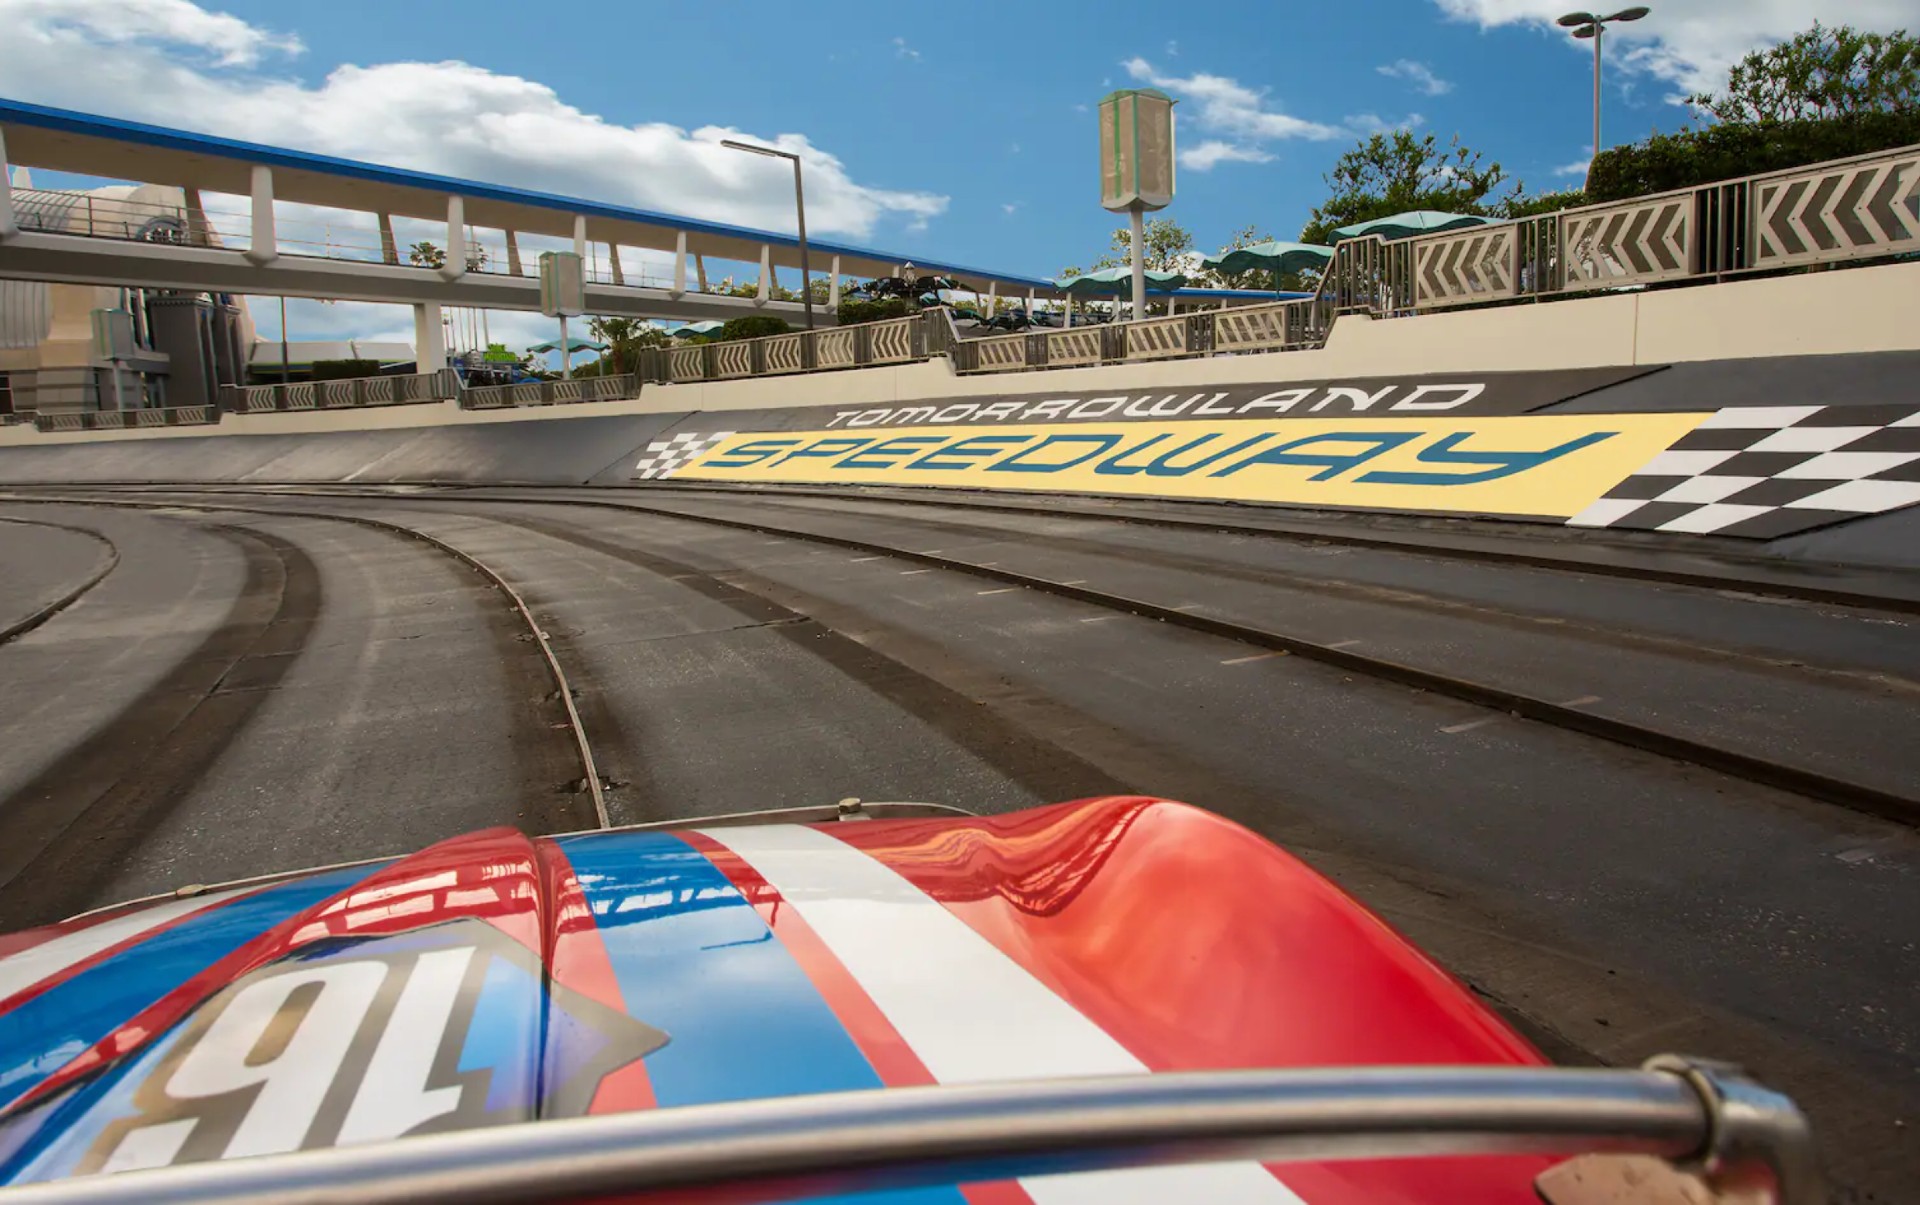 Tomorrowland Speedway at Disney's Magic Kingdom